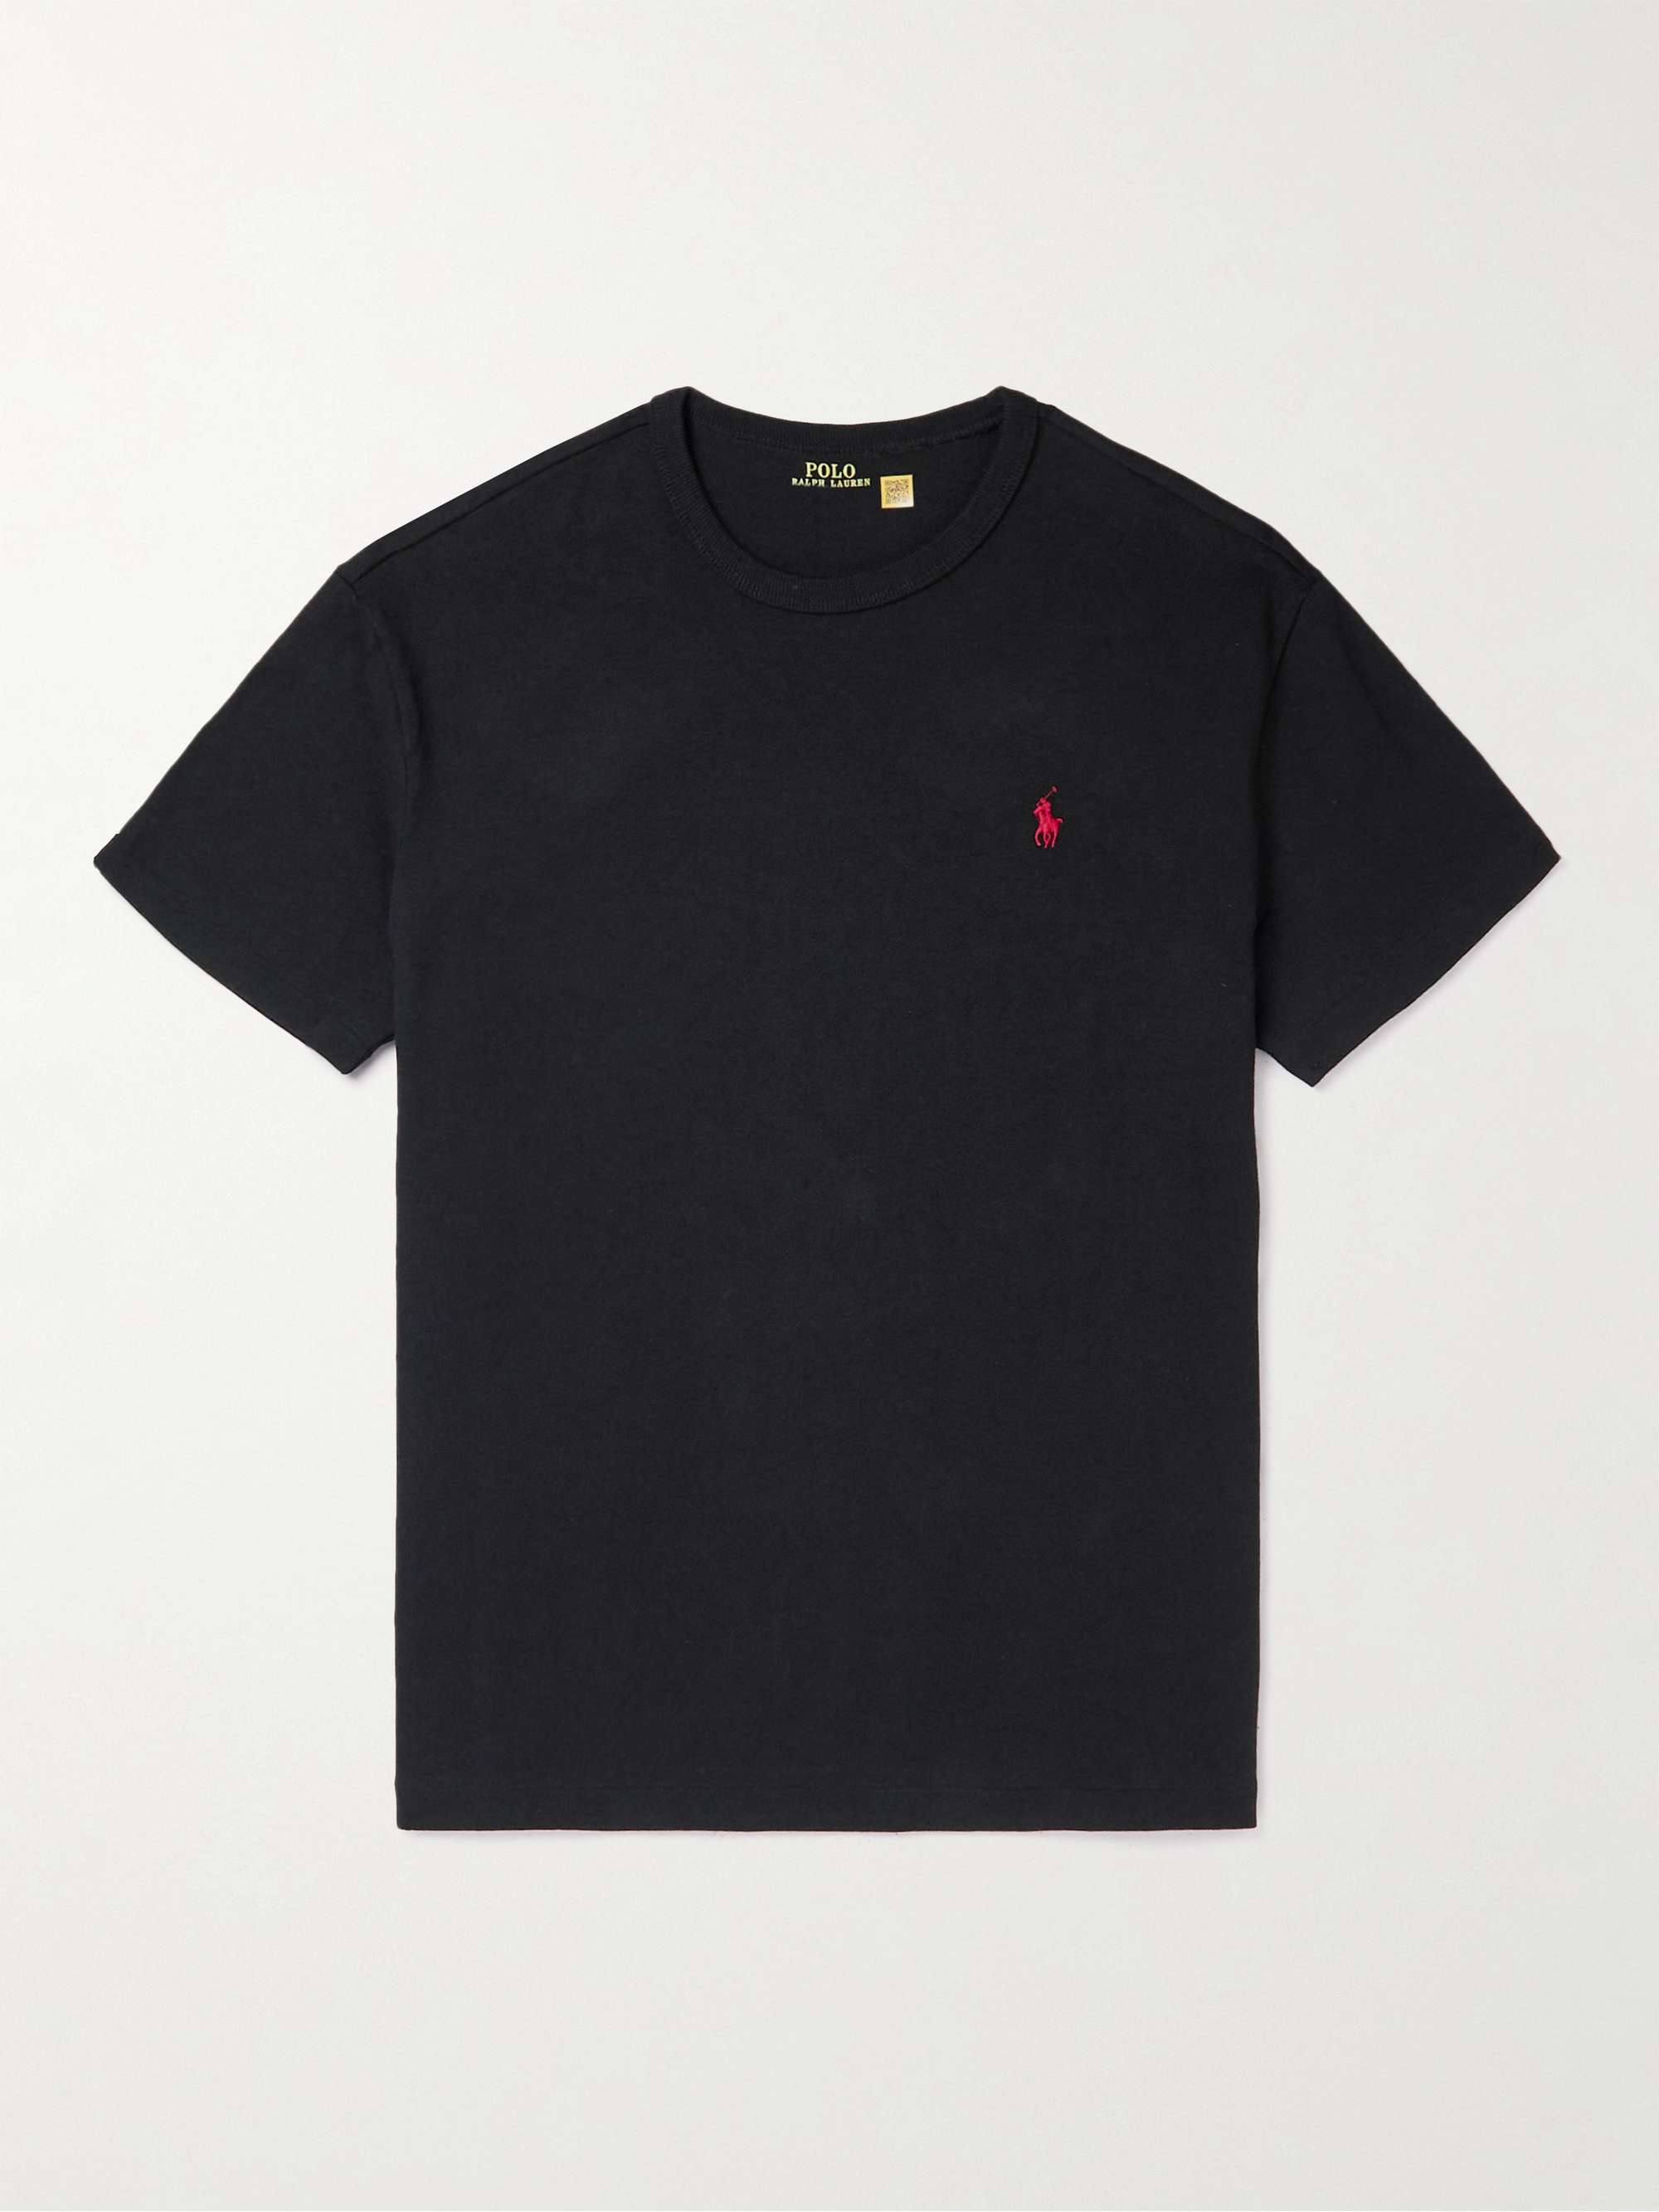 POLO RALPH LAUREN Logo-Embroidered Cotton-Jersey T-Shirt,Black